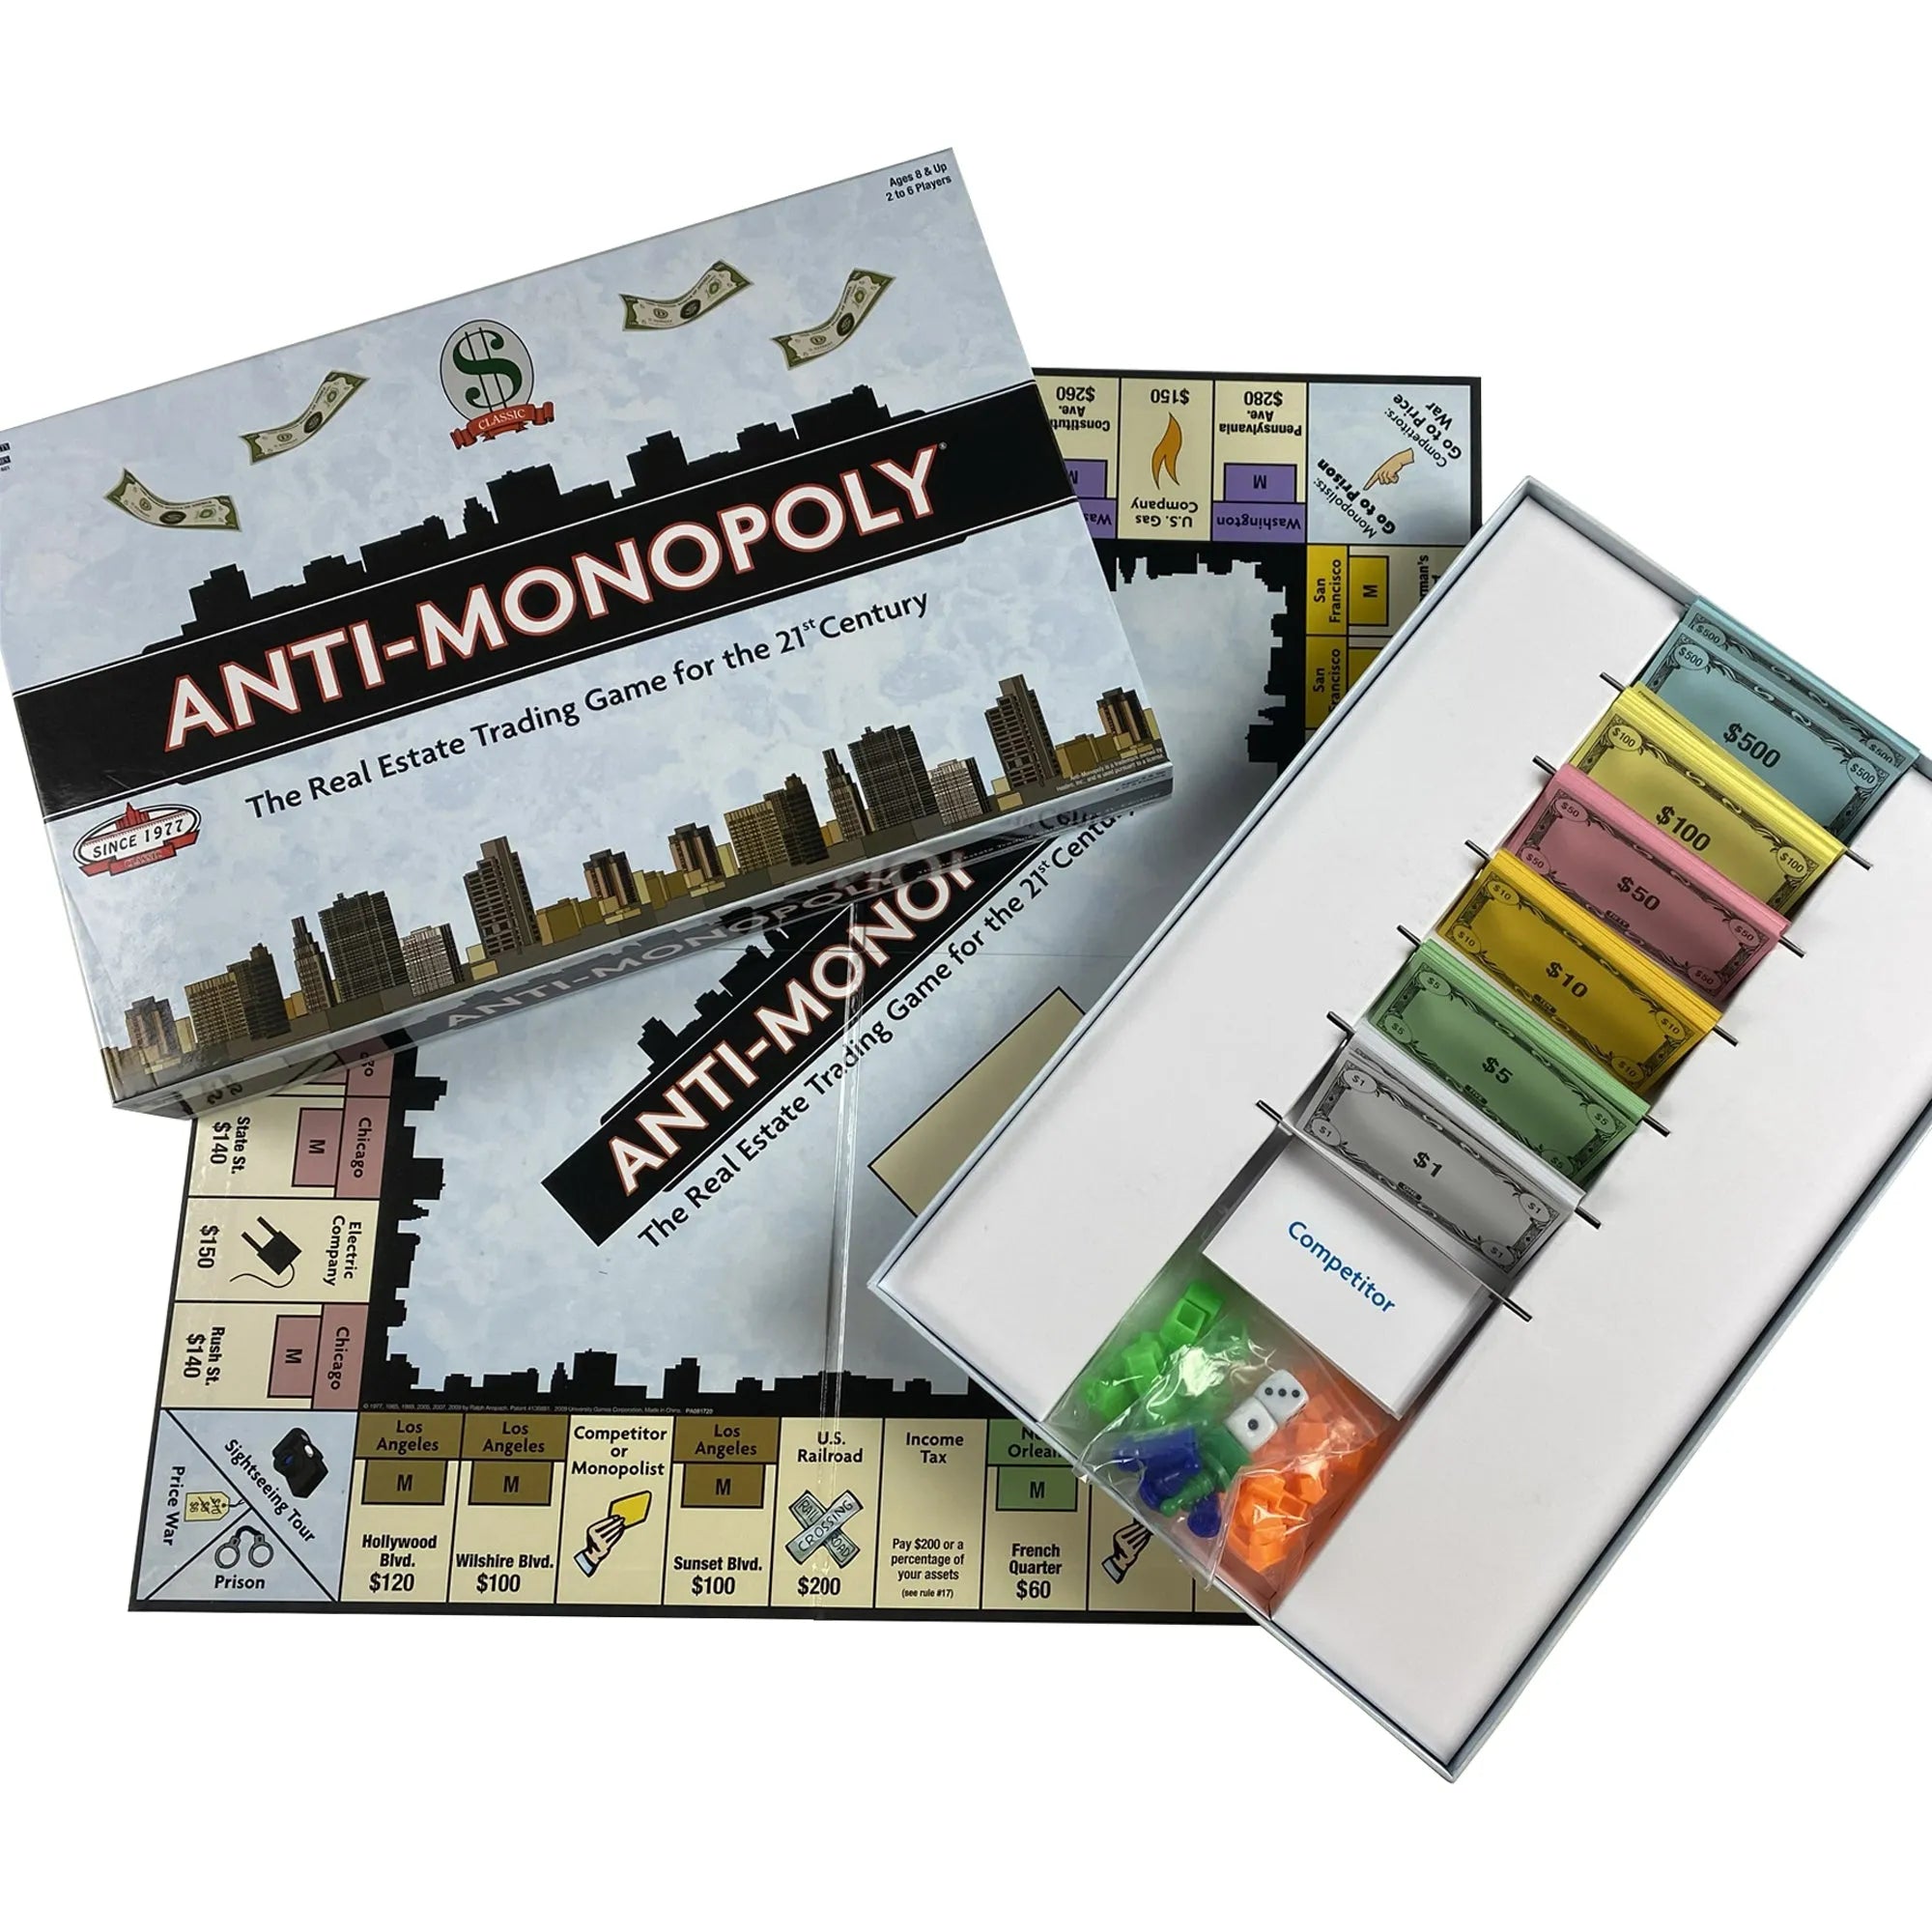 Interactive Board Game for children - shop anti monopoly board game for children - University Games